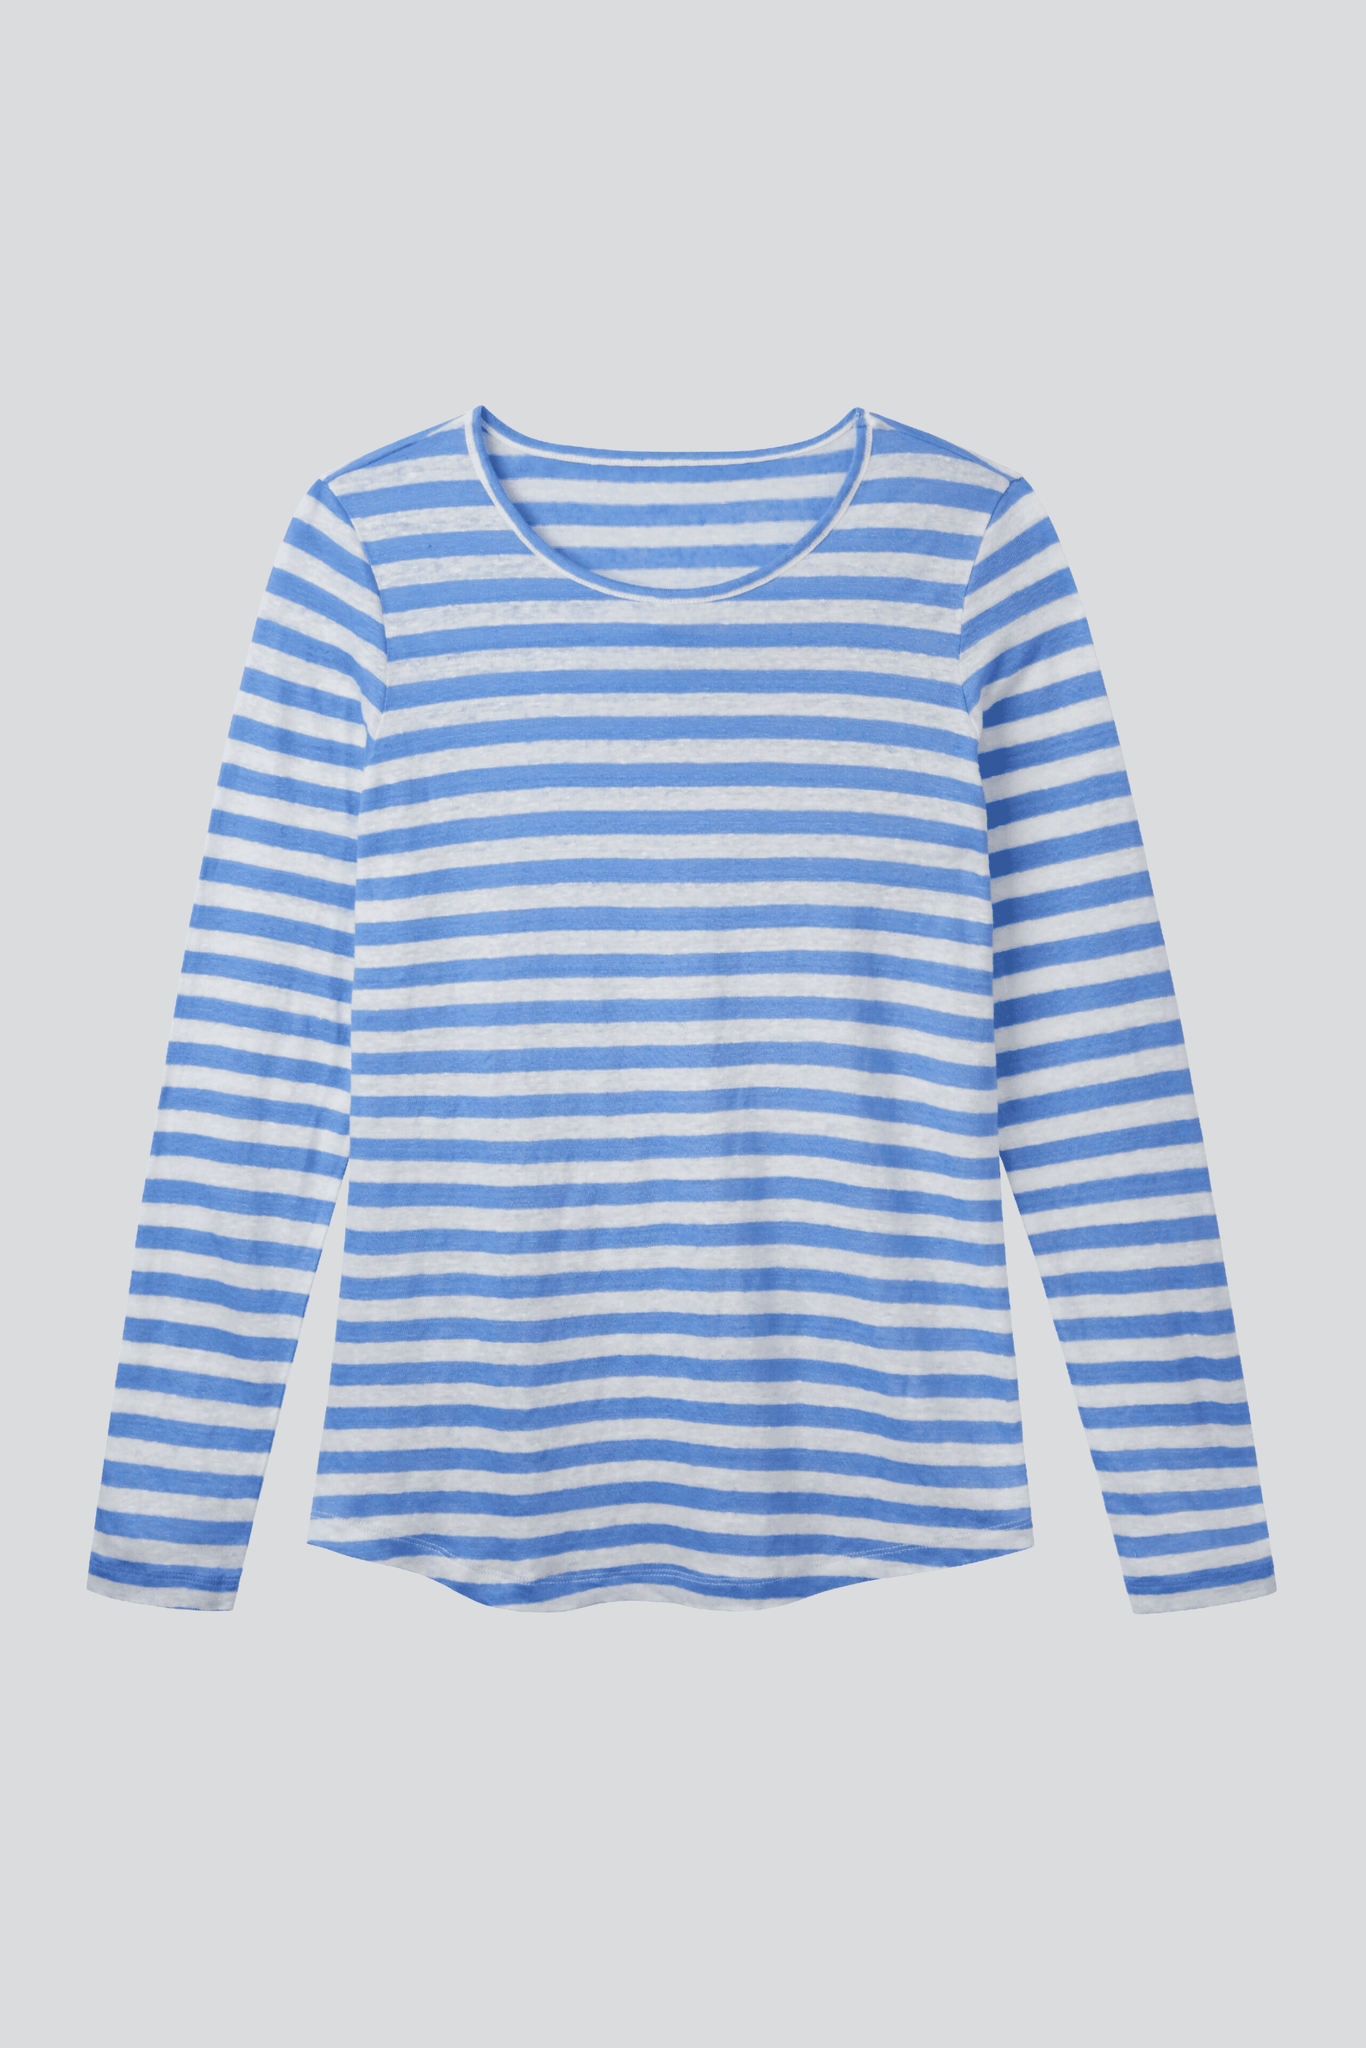 Long Sleeve Striped Linen T-shirt Women's Long Sleeve T-shirt Lavender Hill Taylor Swift Style